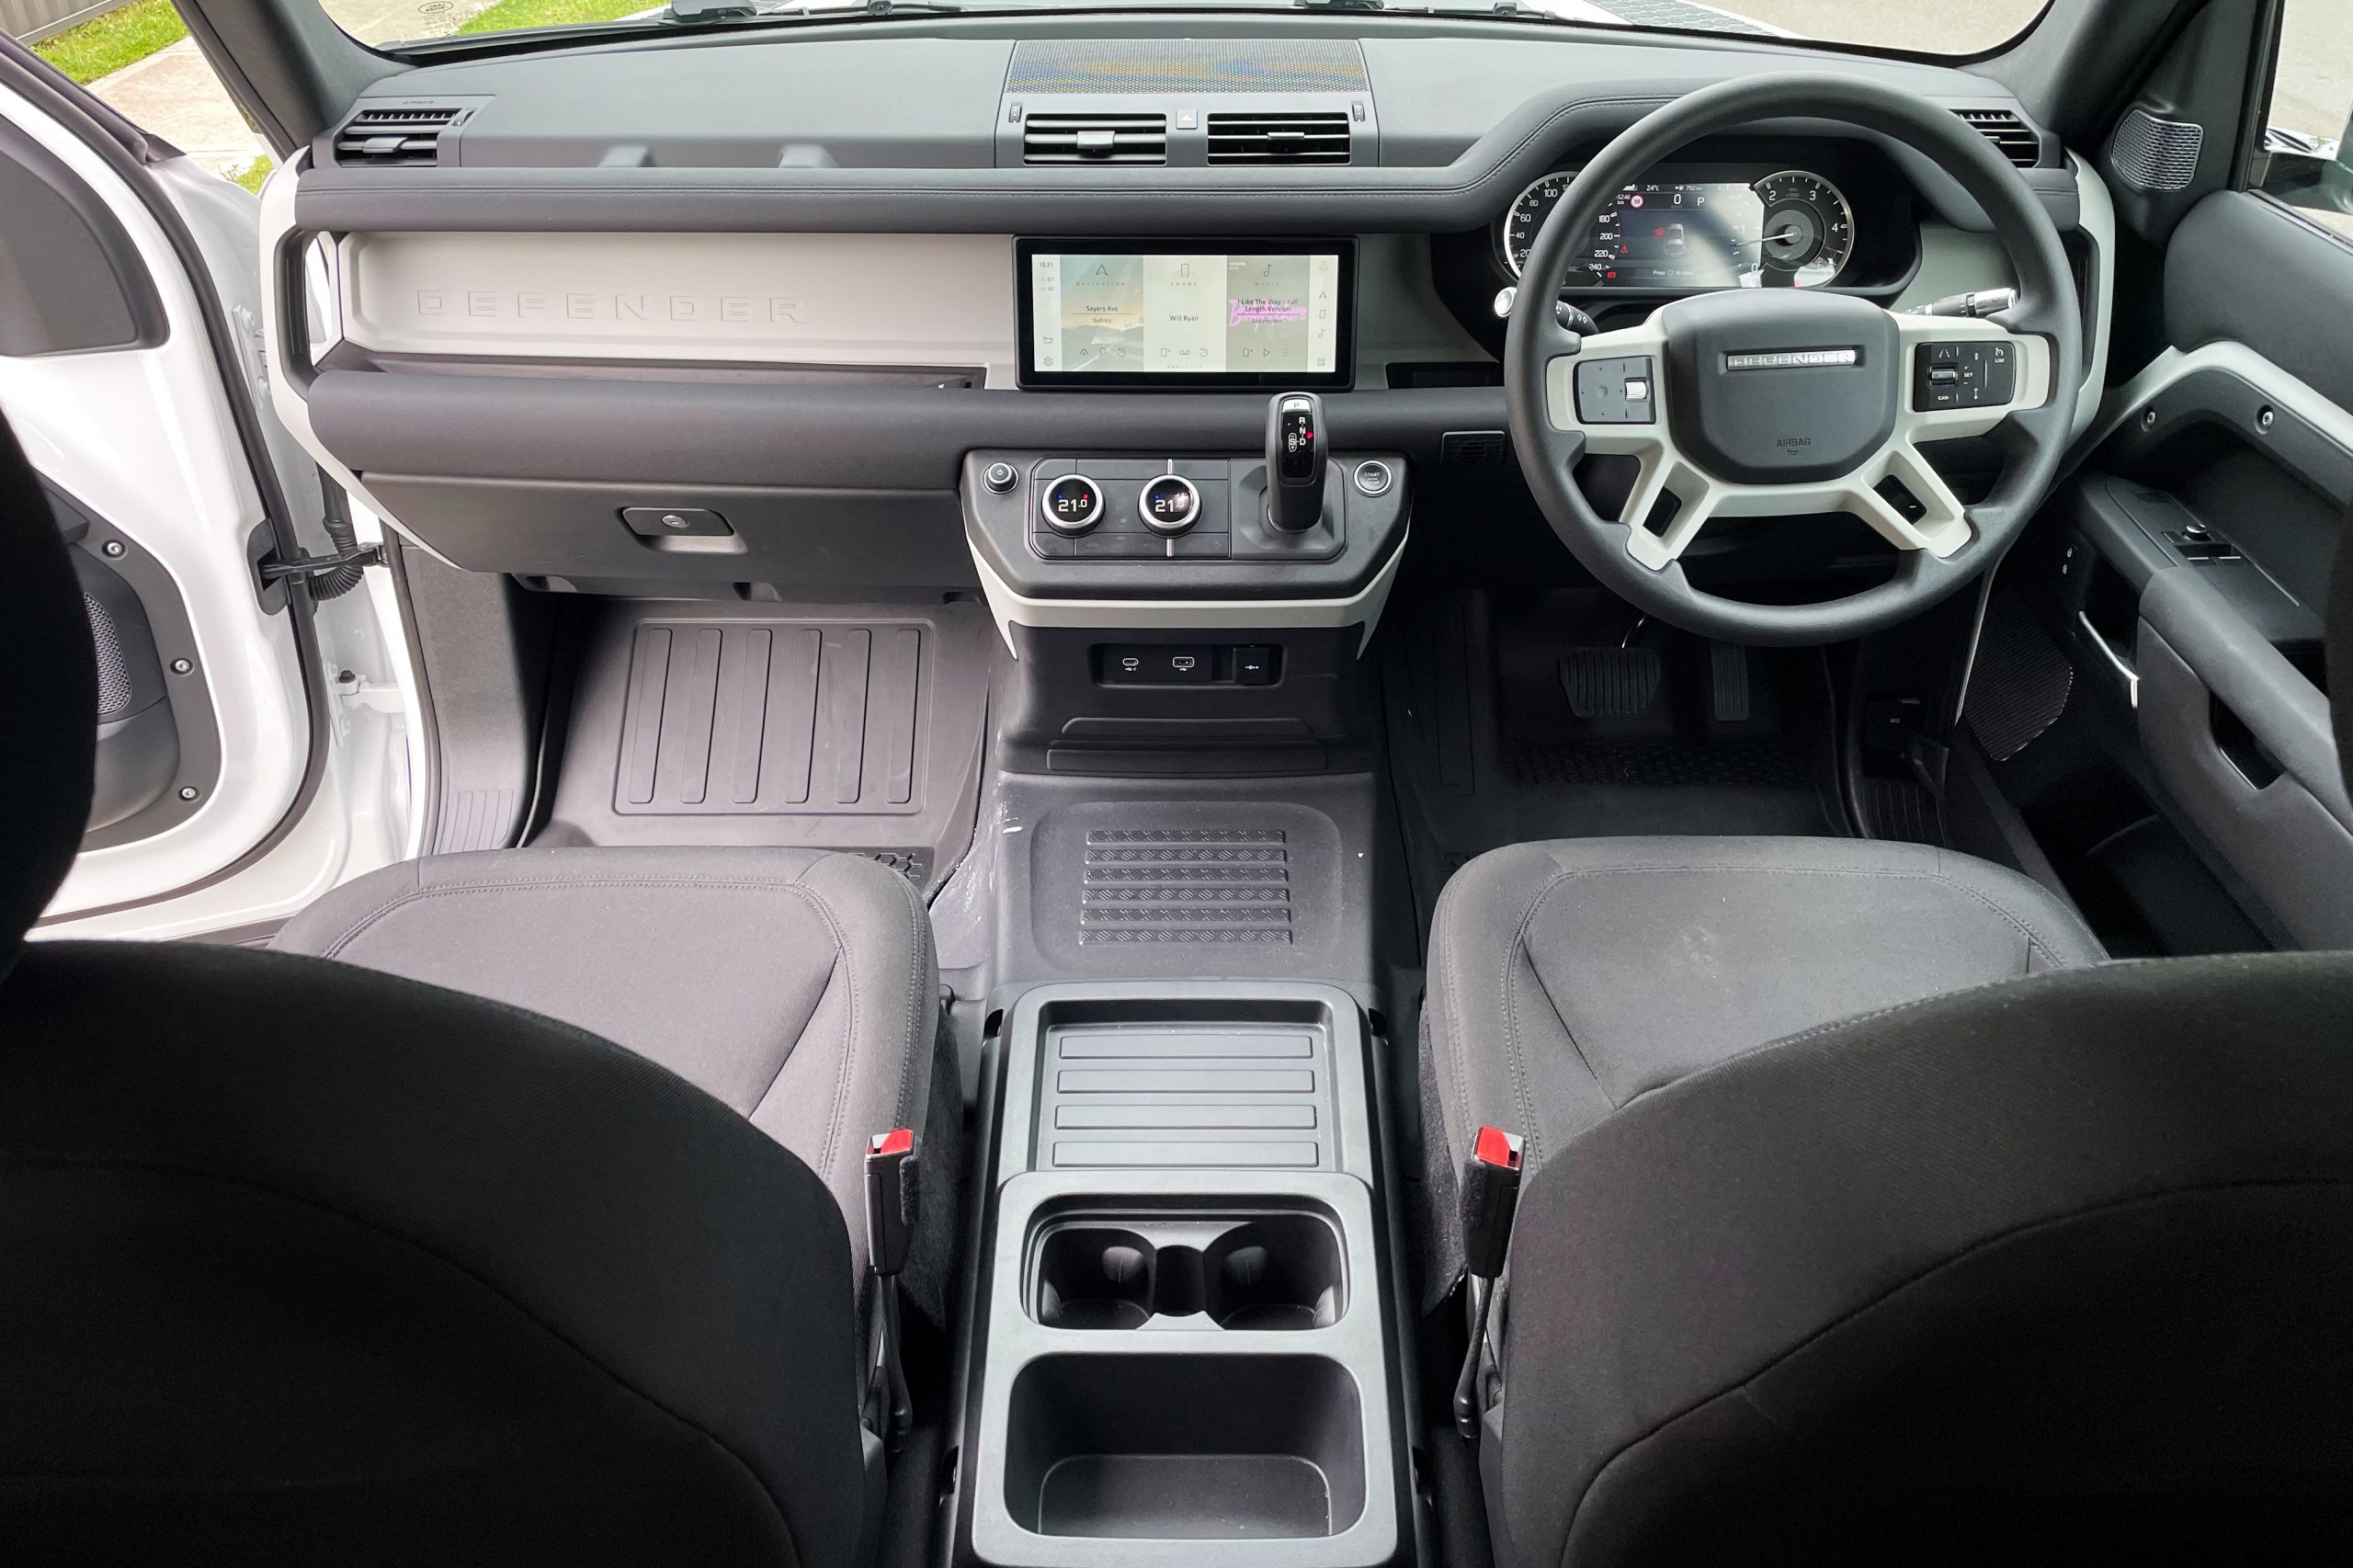 Land Rover Defender 90 front interior